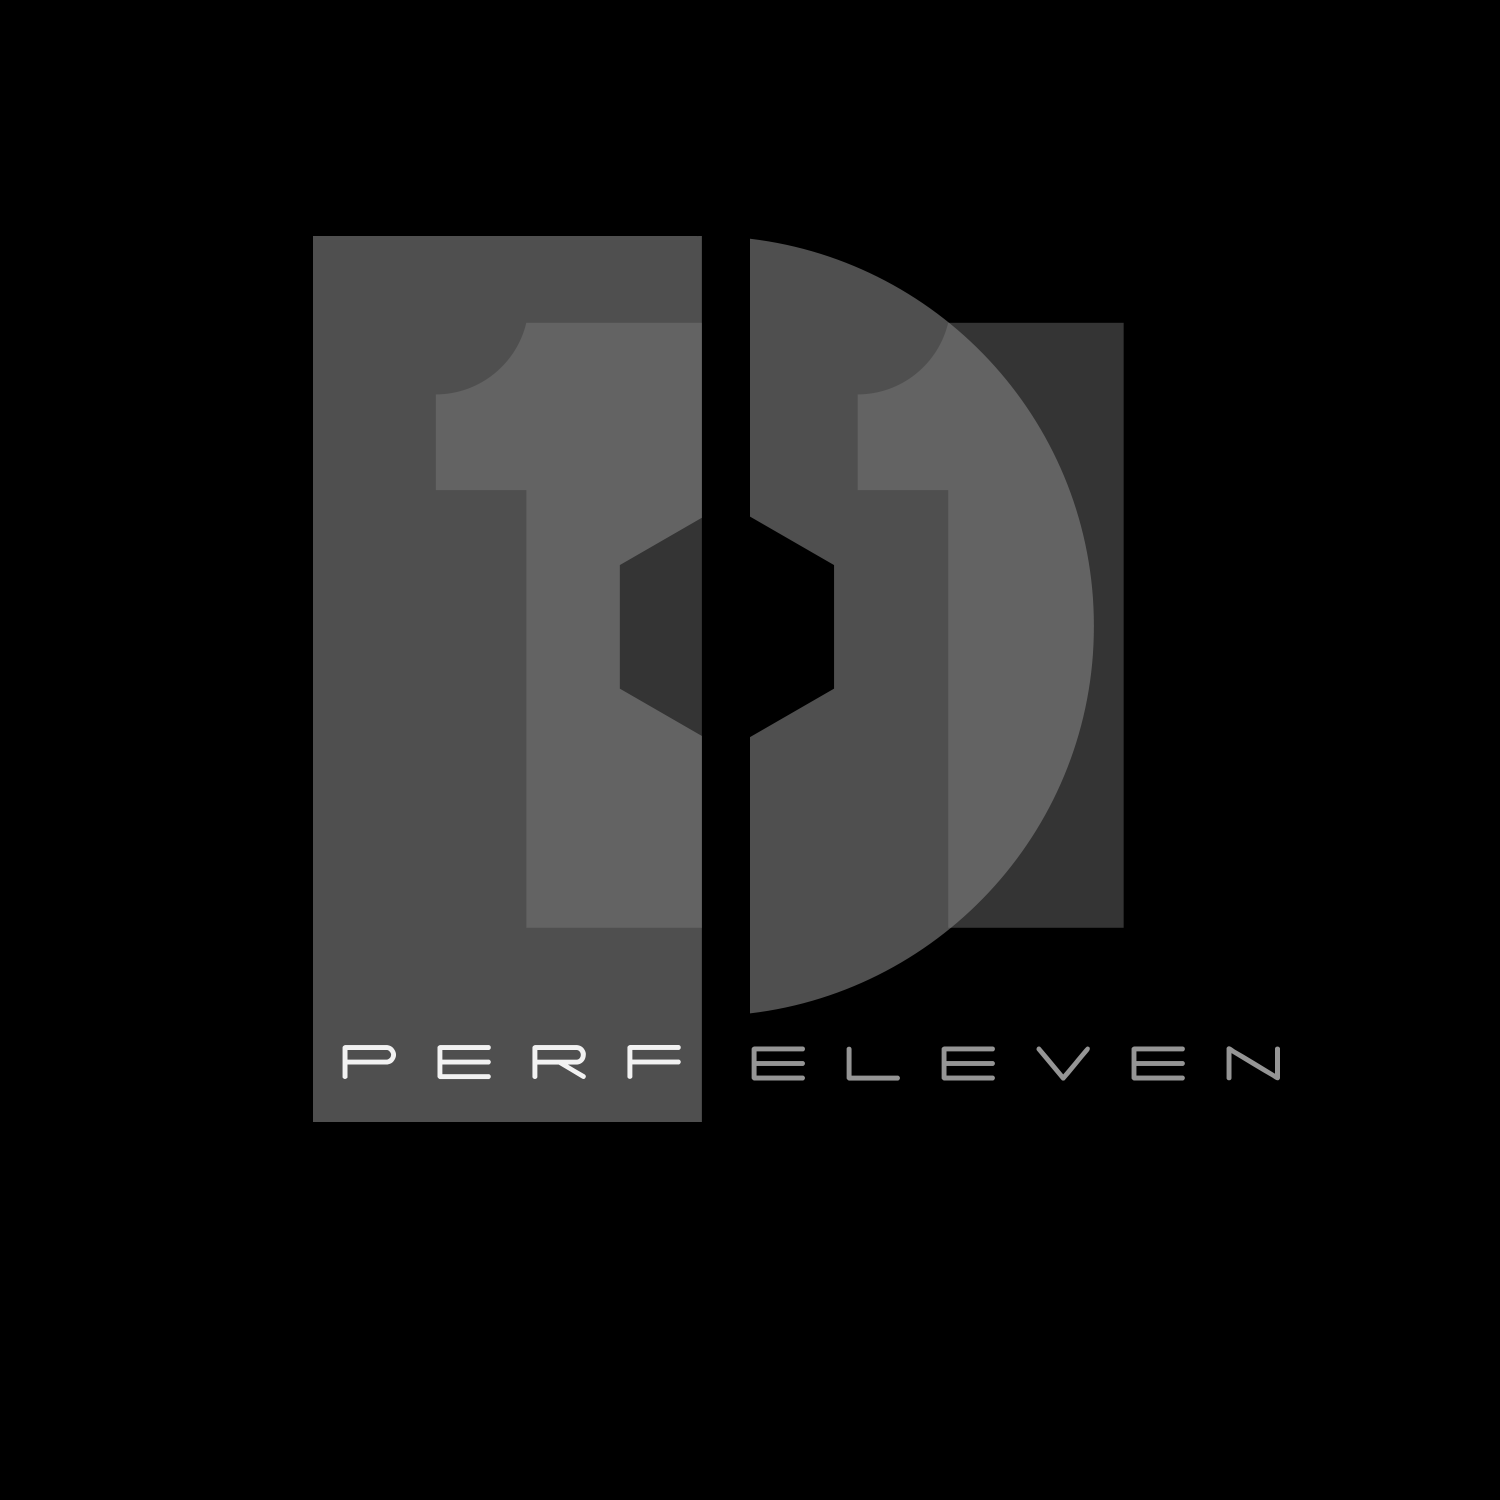 Perf Eleven